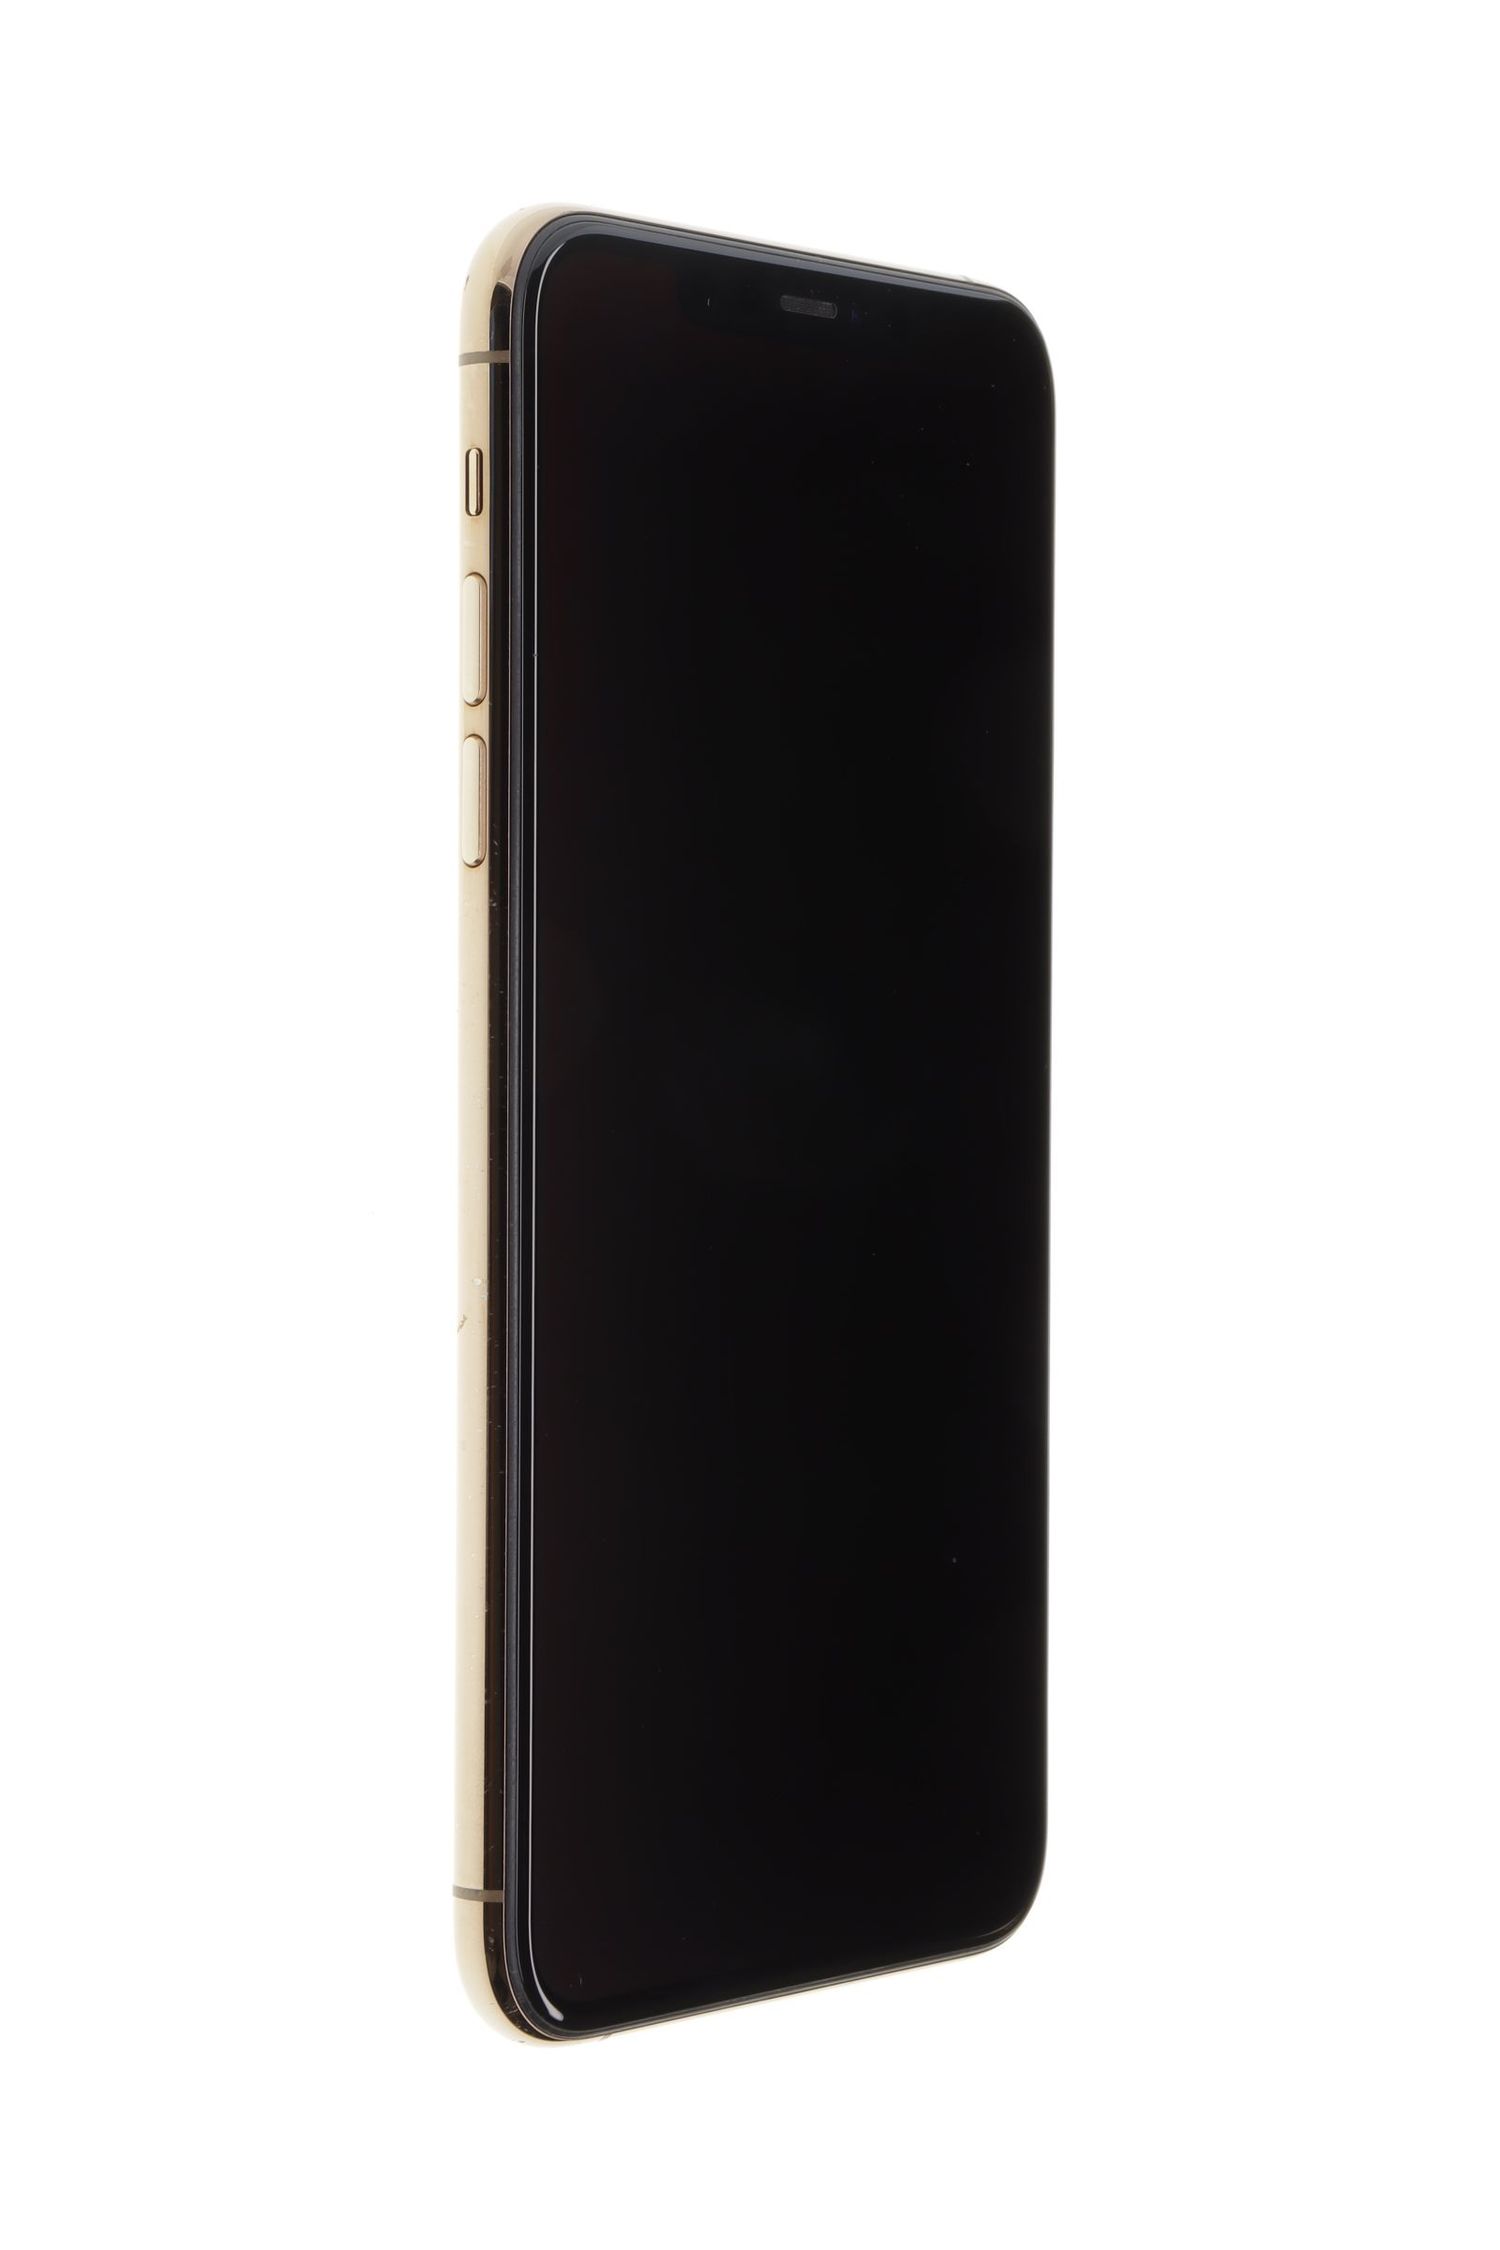 Мобилен телефон Apple iPhone 11 Pro Max, Gold, 64 GB, Foarte Bun